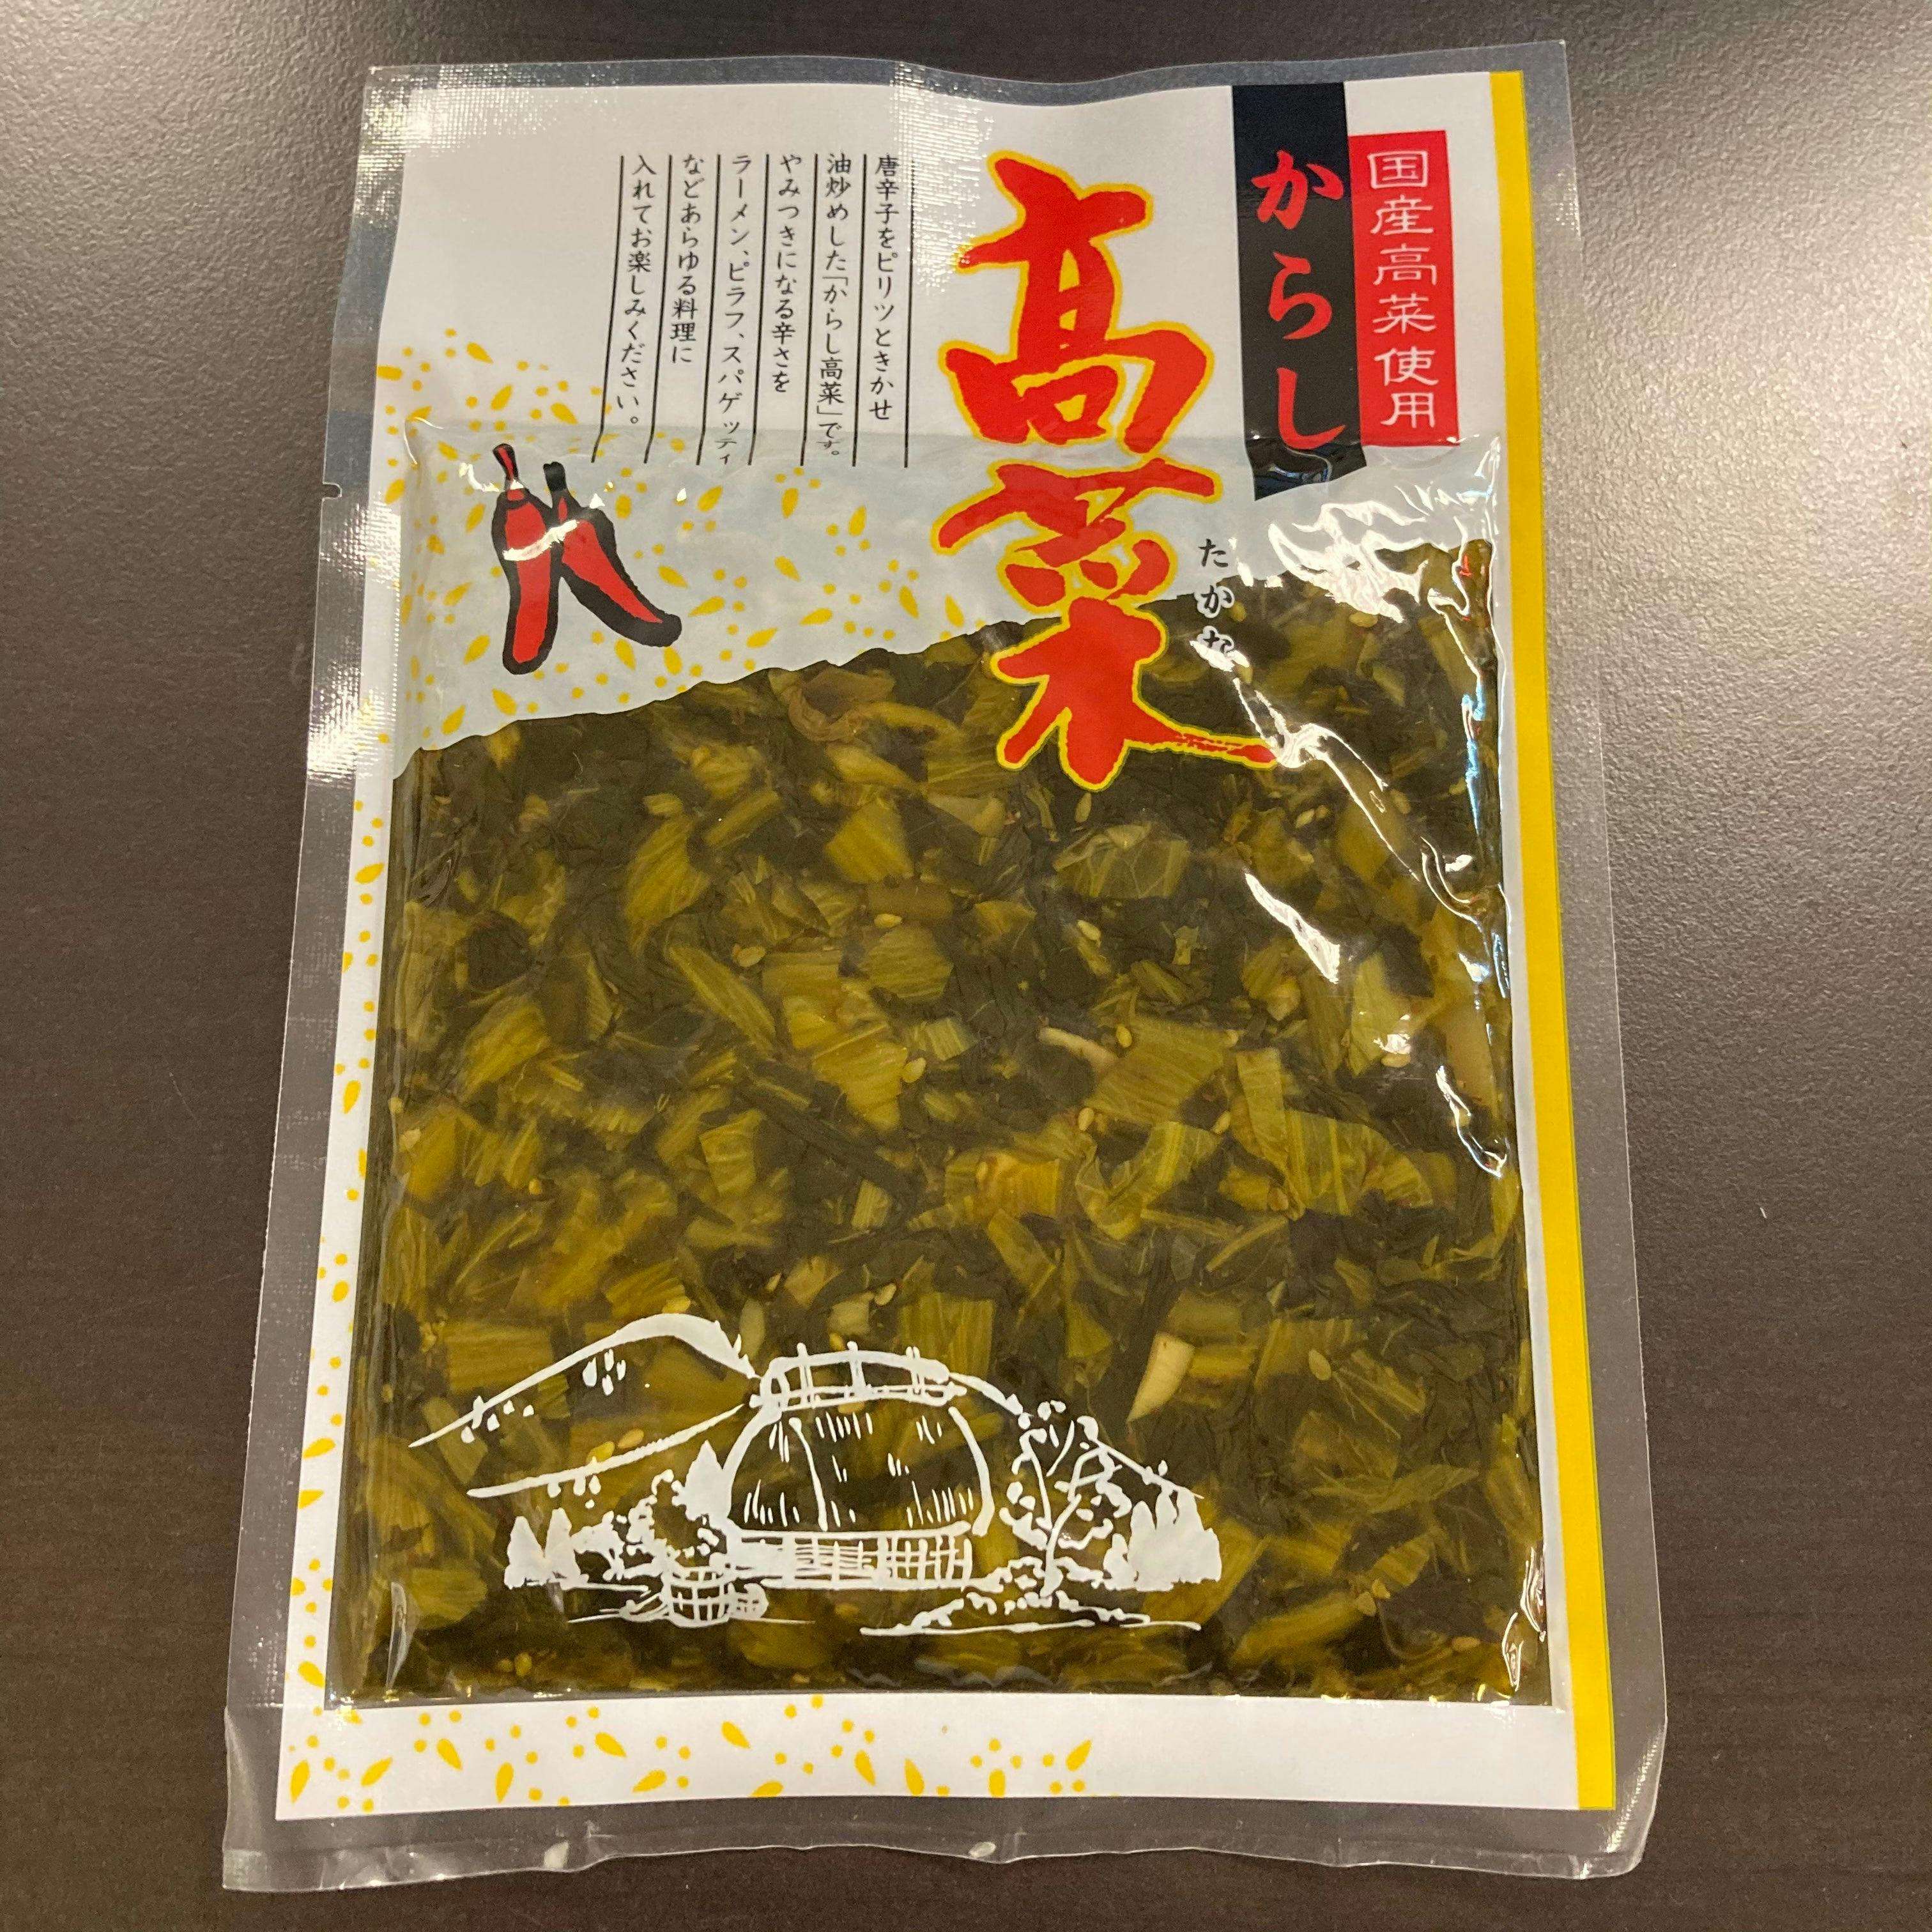 Karashi Takana (Pickled Takana Mustard with Chili) 130g